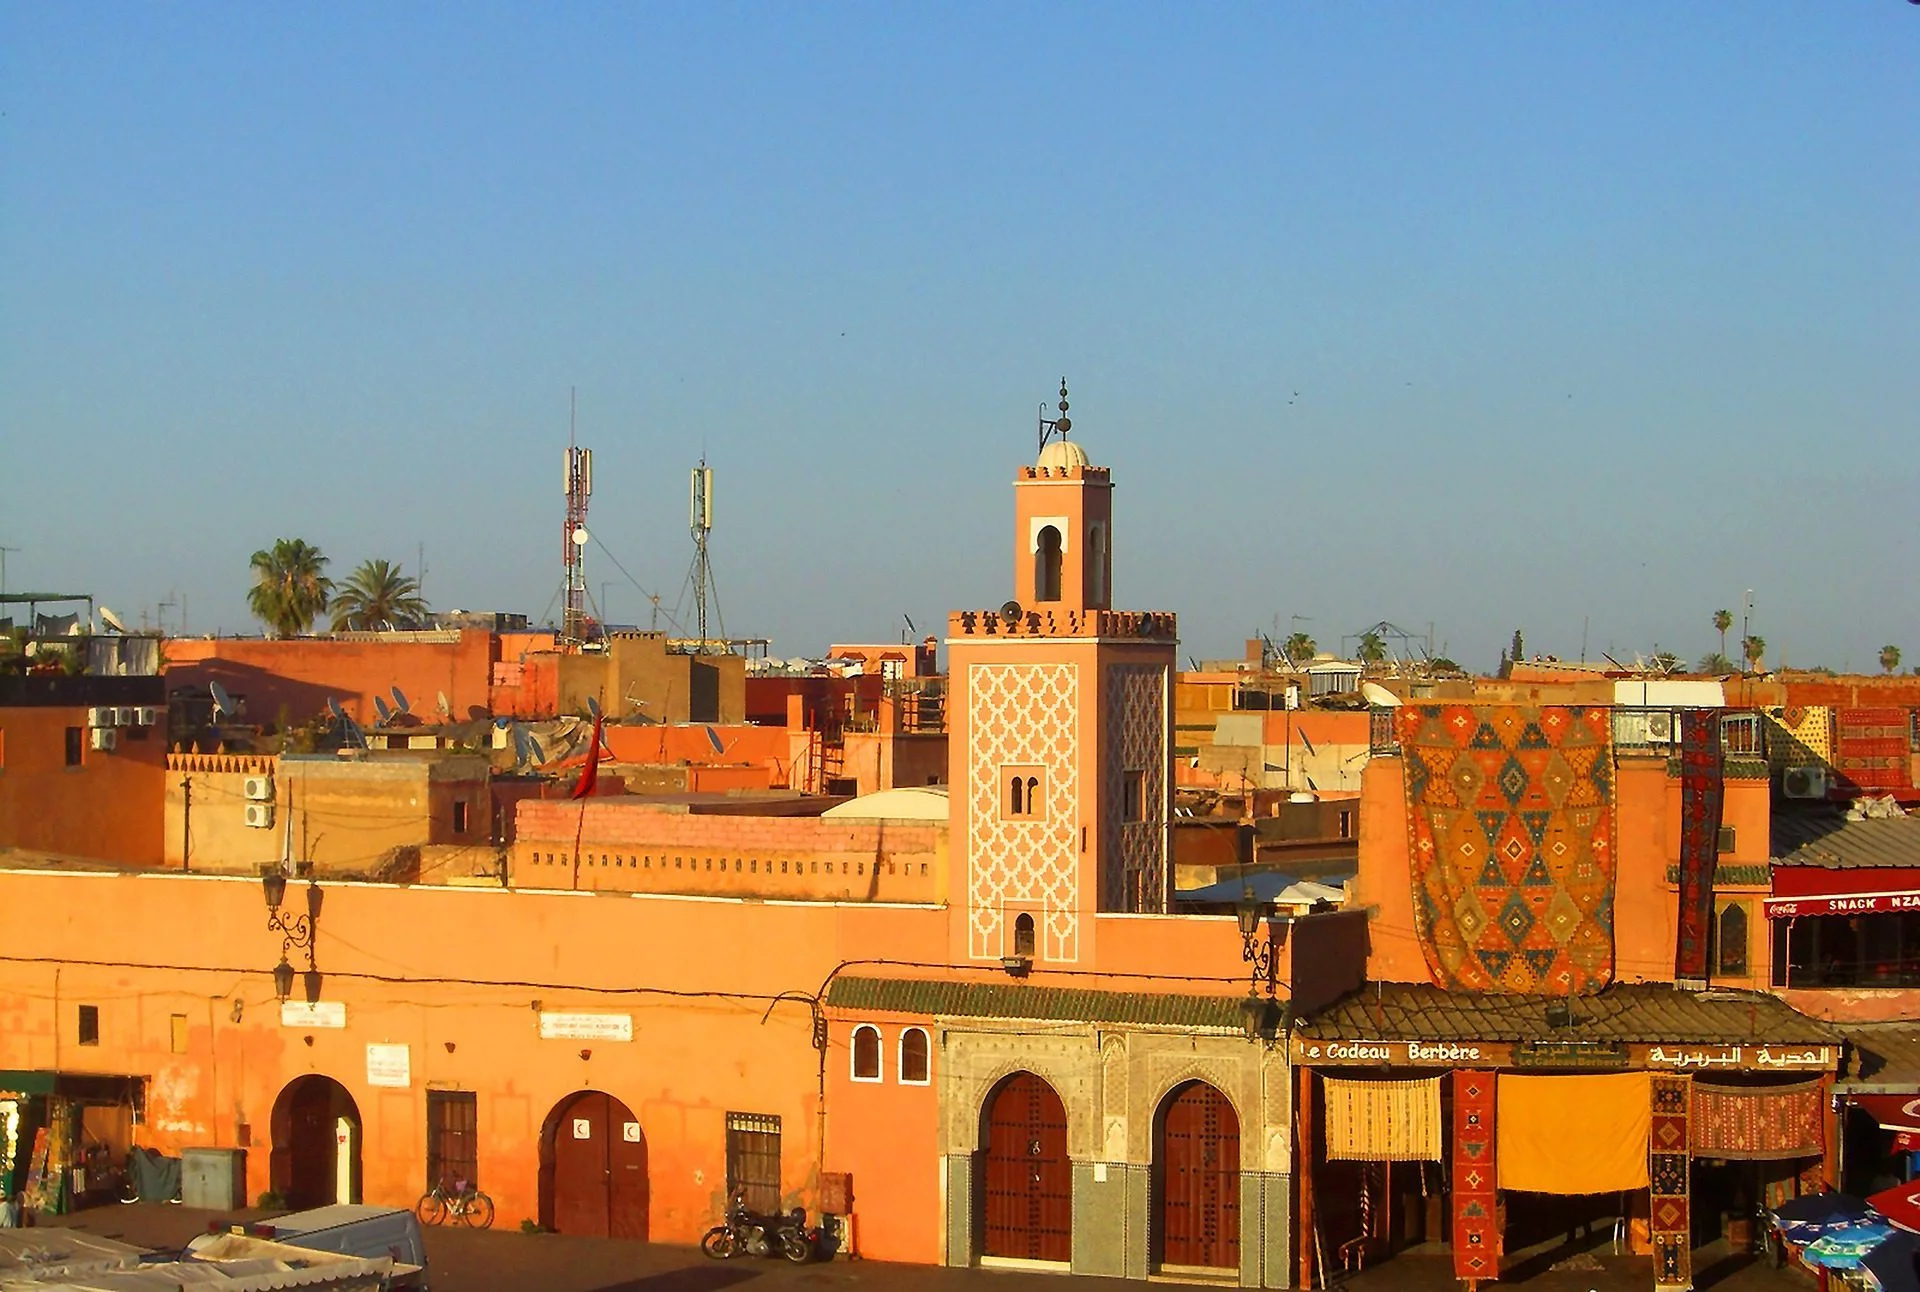 Day 9 : Ait Ben Haddou to Marrakech